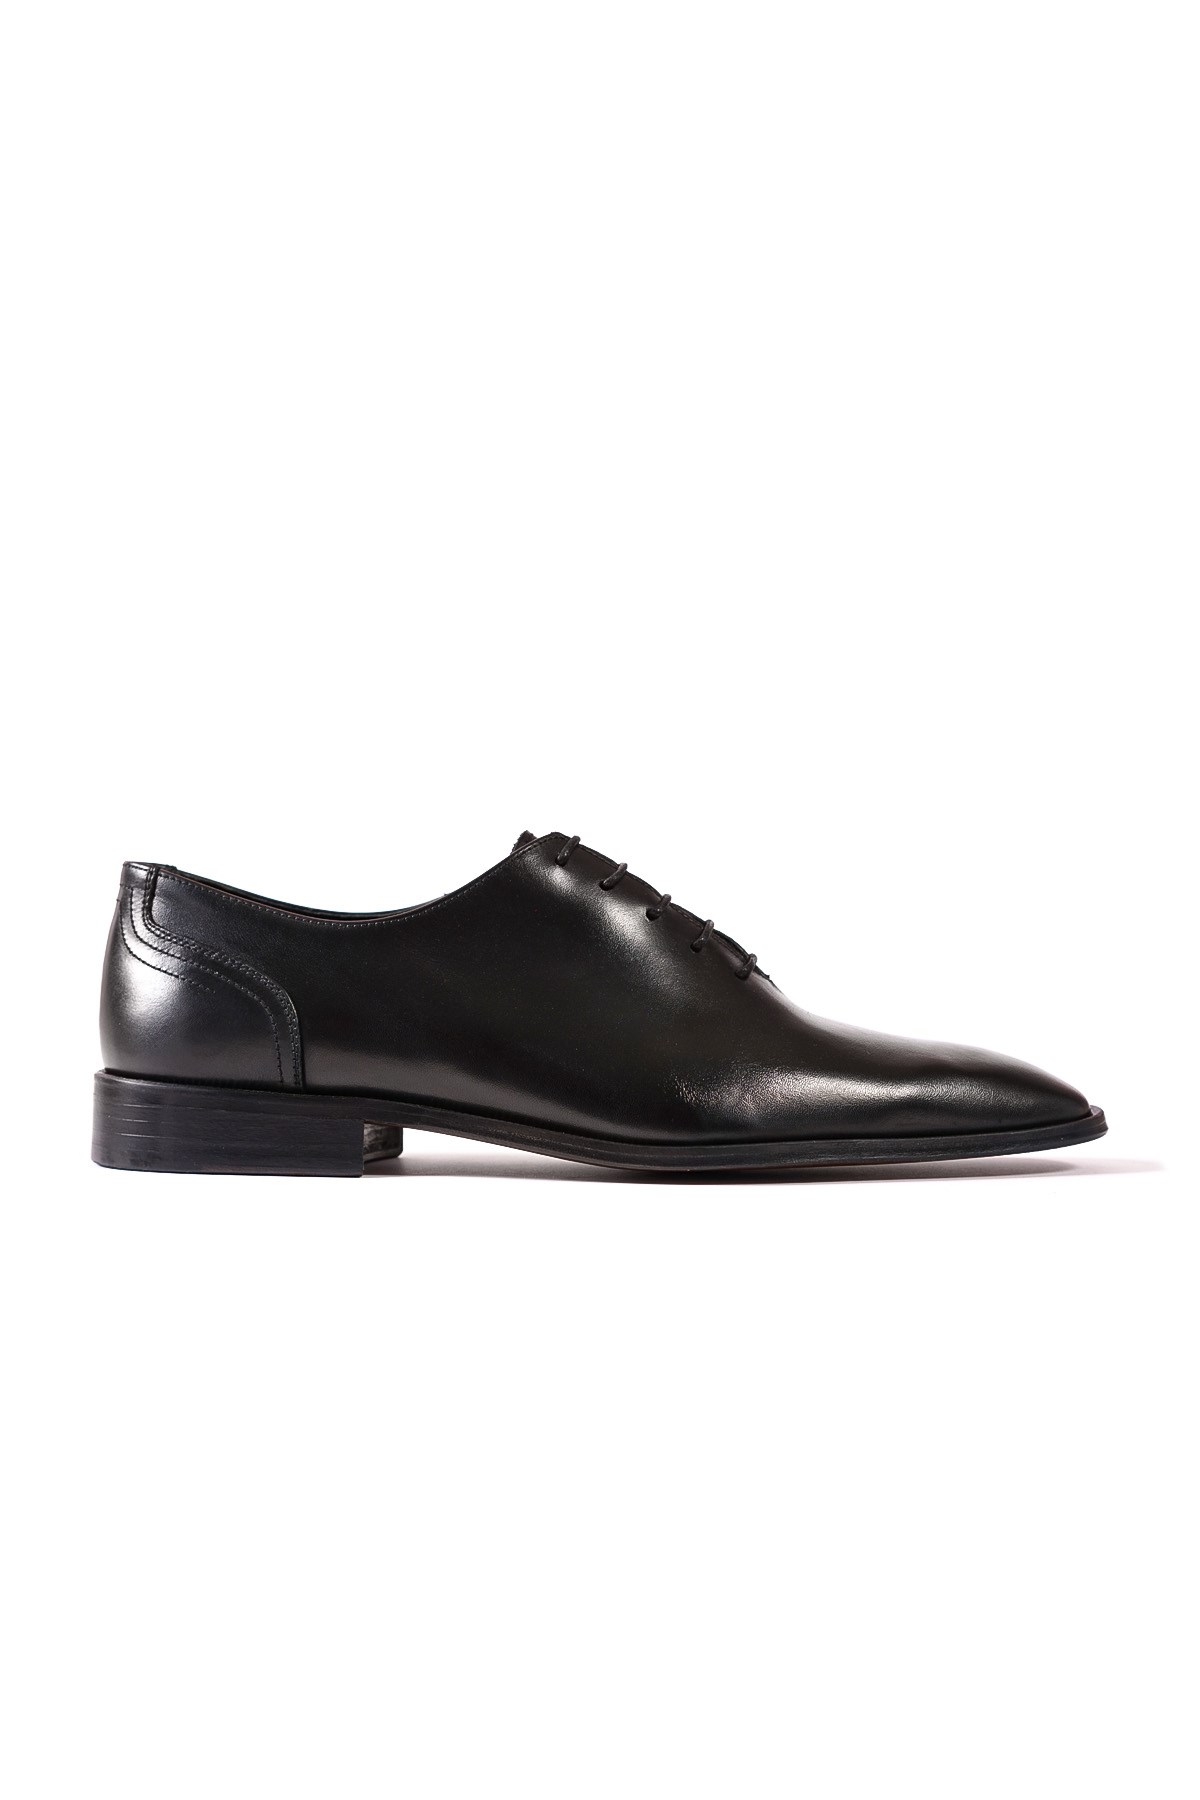 Avangard Black Genuine Leather Classic Men's Shoes